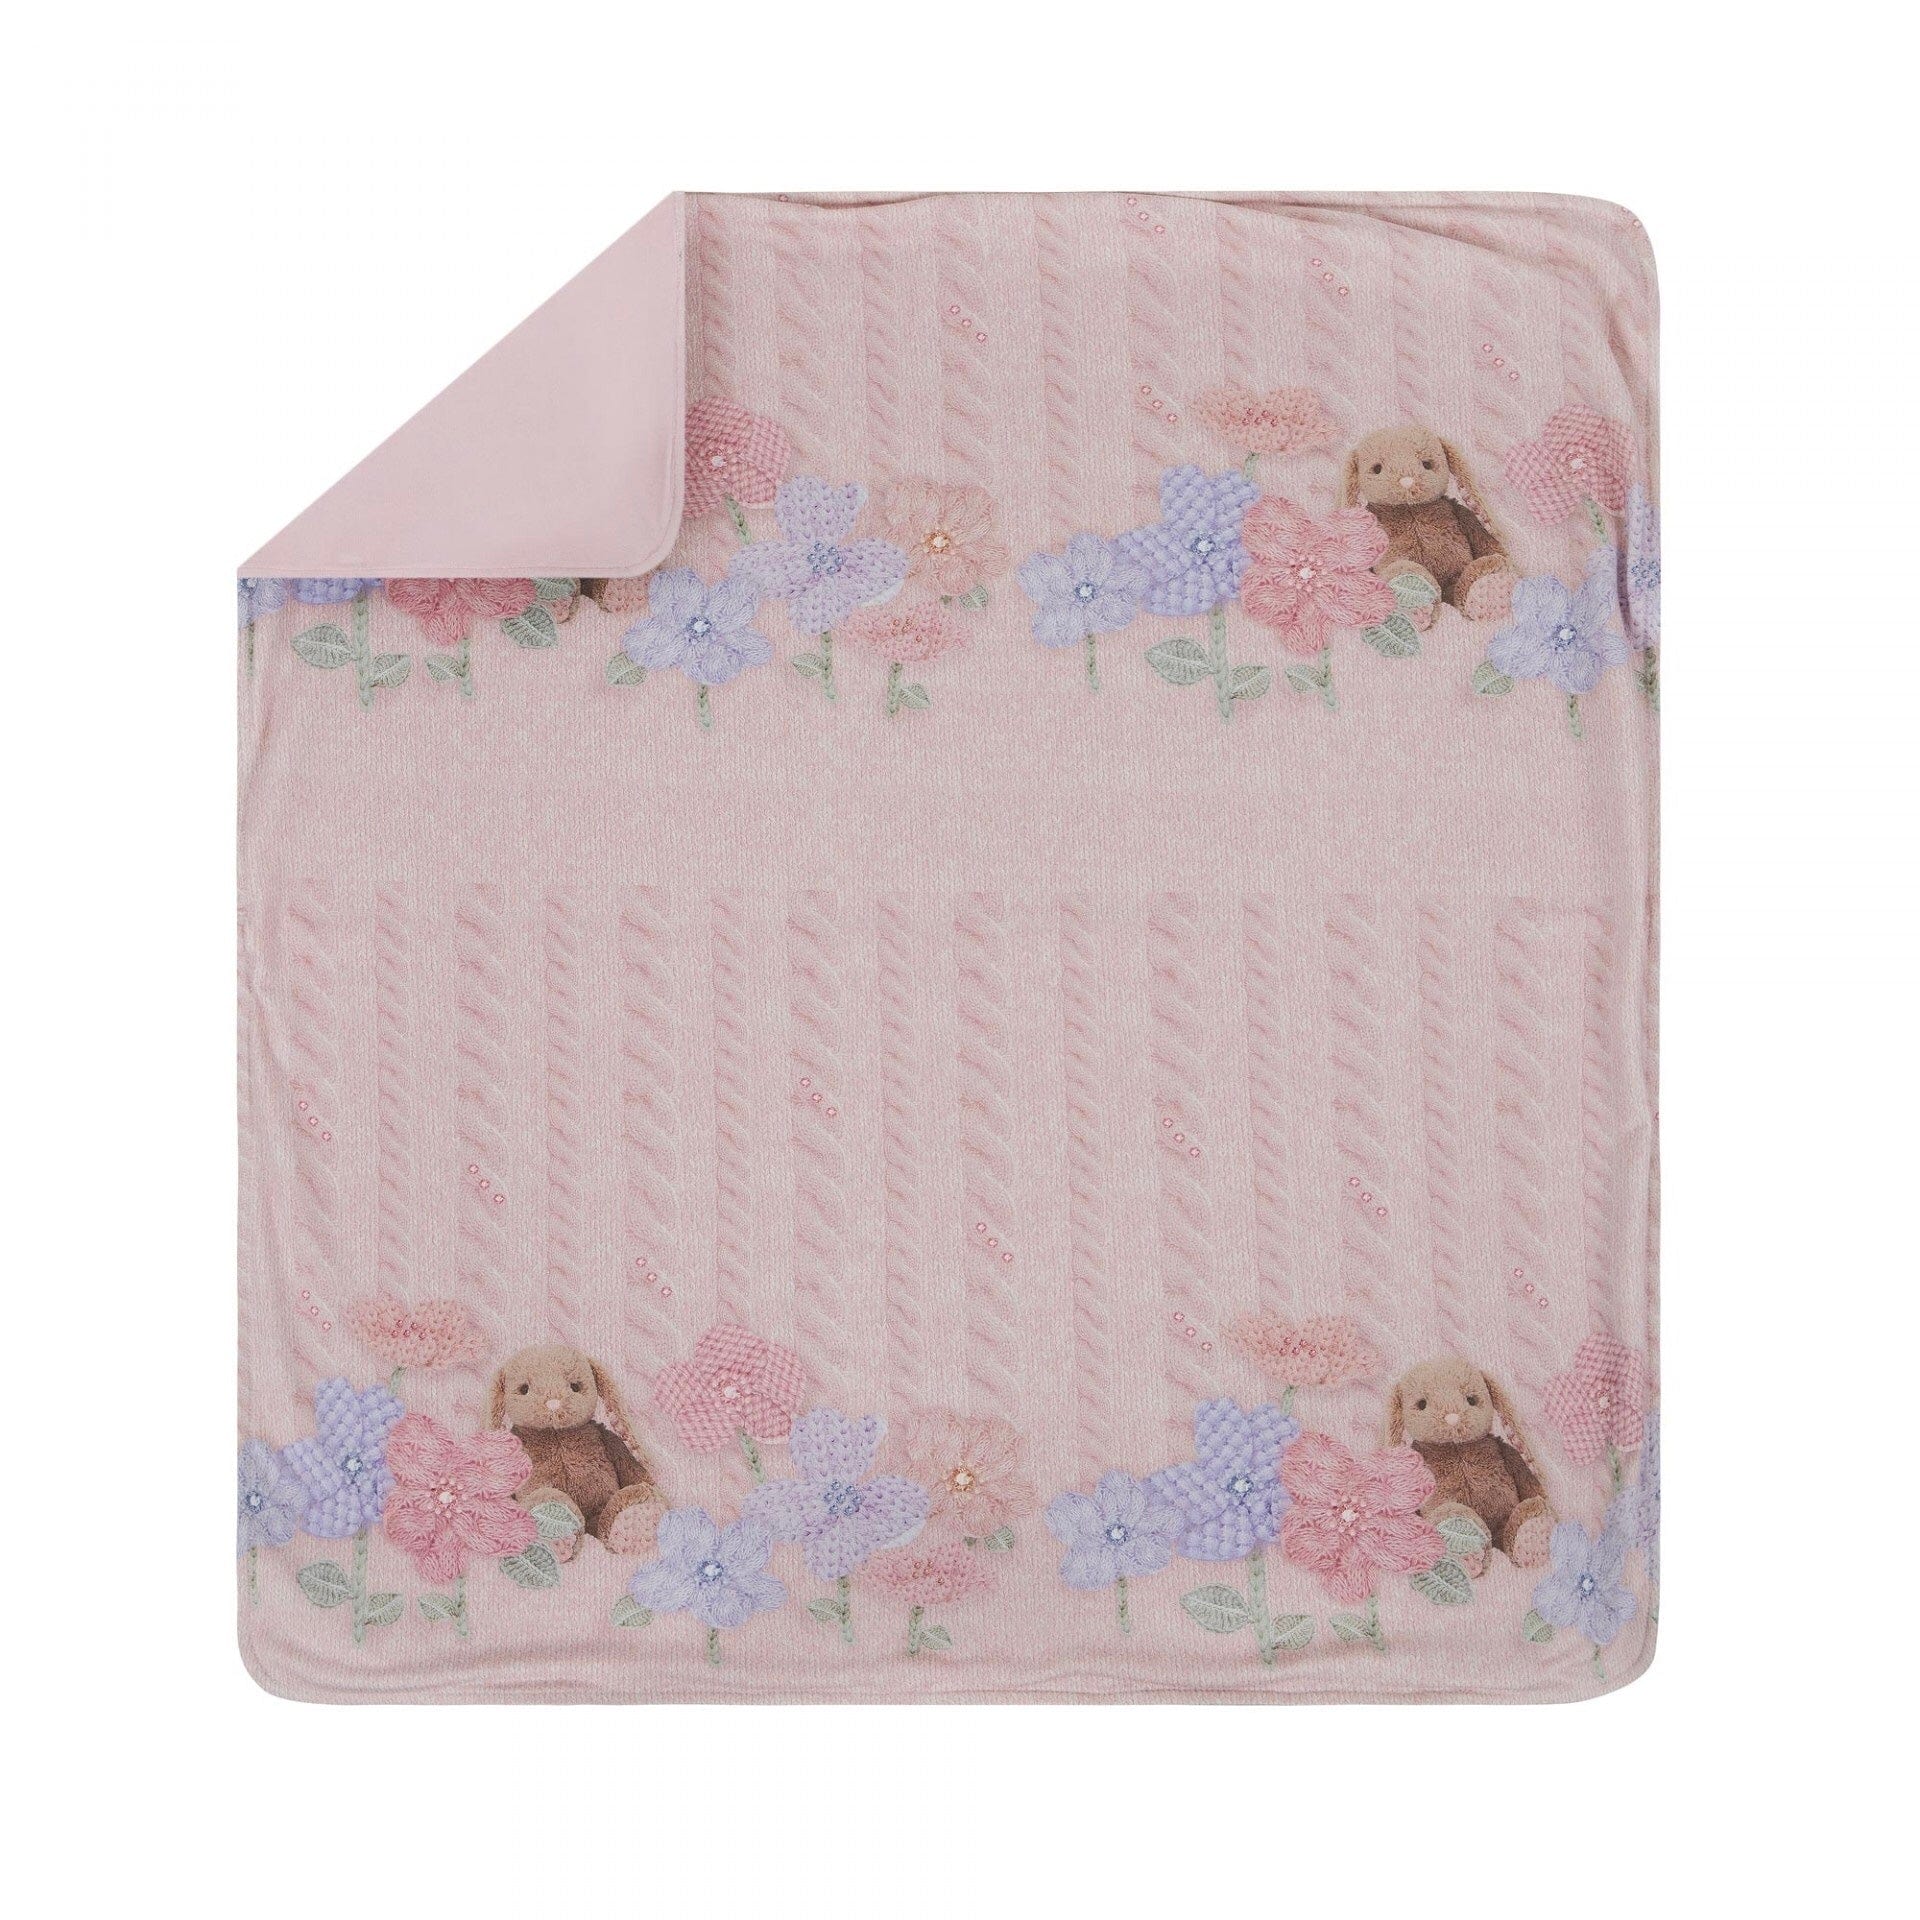 LAPIN HOUSE - Rabbit Blanket - Pink